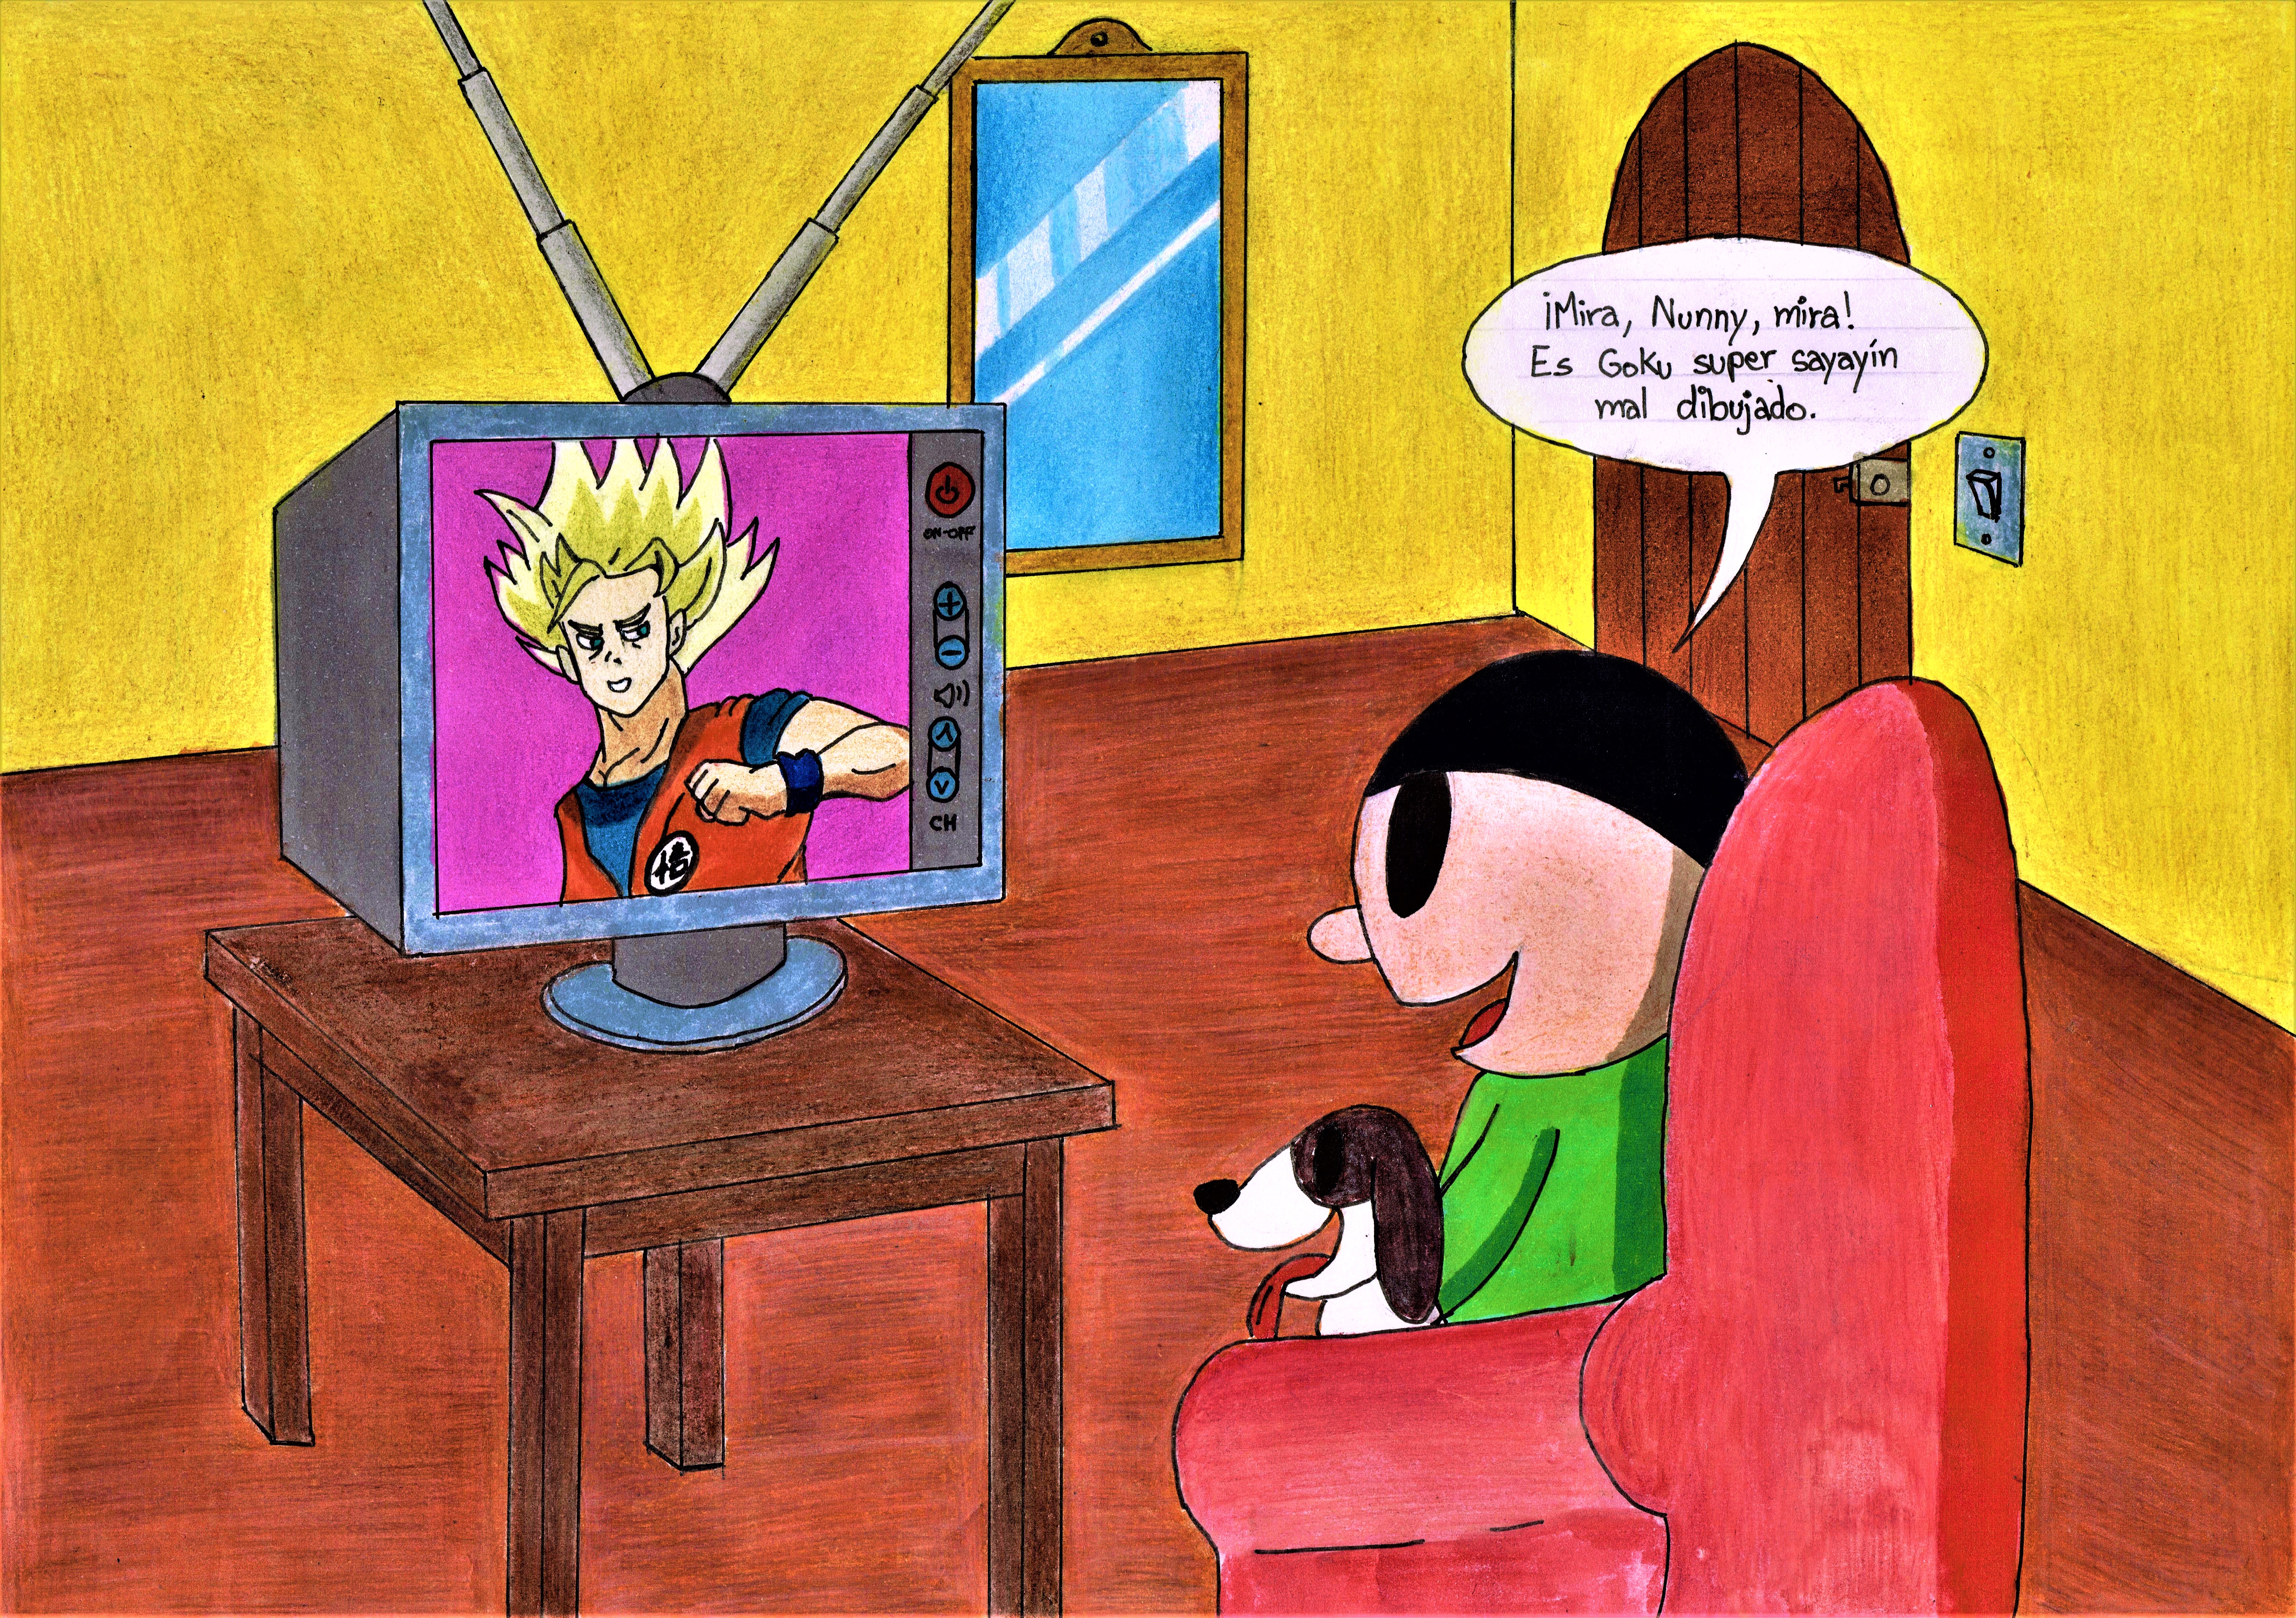 Juan Carlos viendo a Goku Ssj mal dibujado en laTV by Juanquicho on  DeviantArt